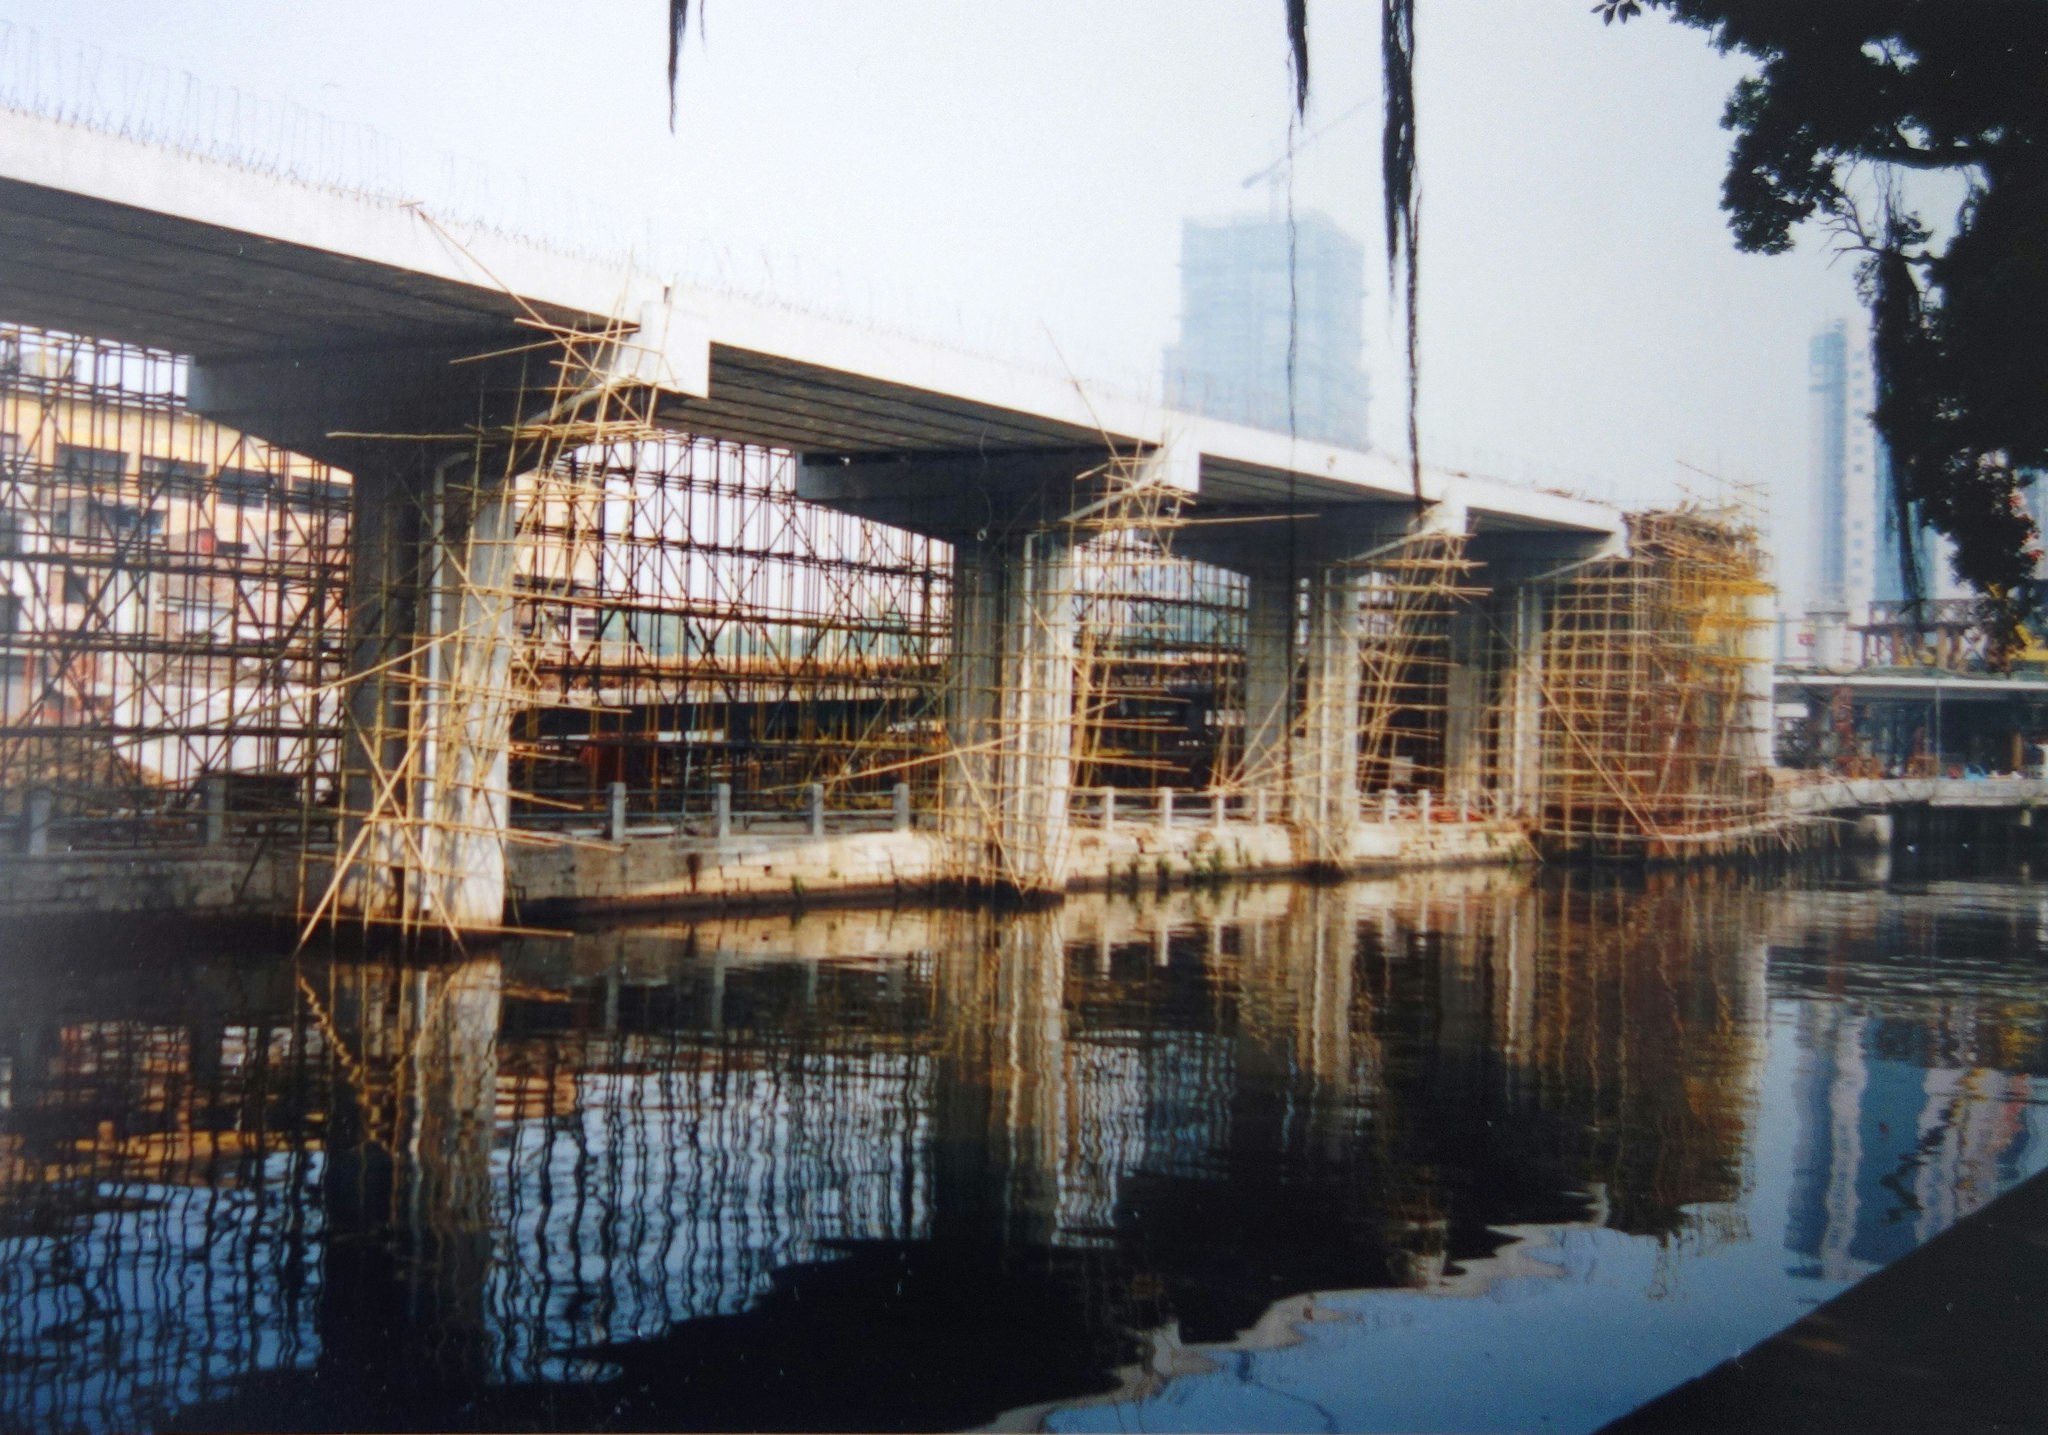 Scaffolding around a bridge over water.